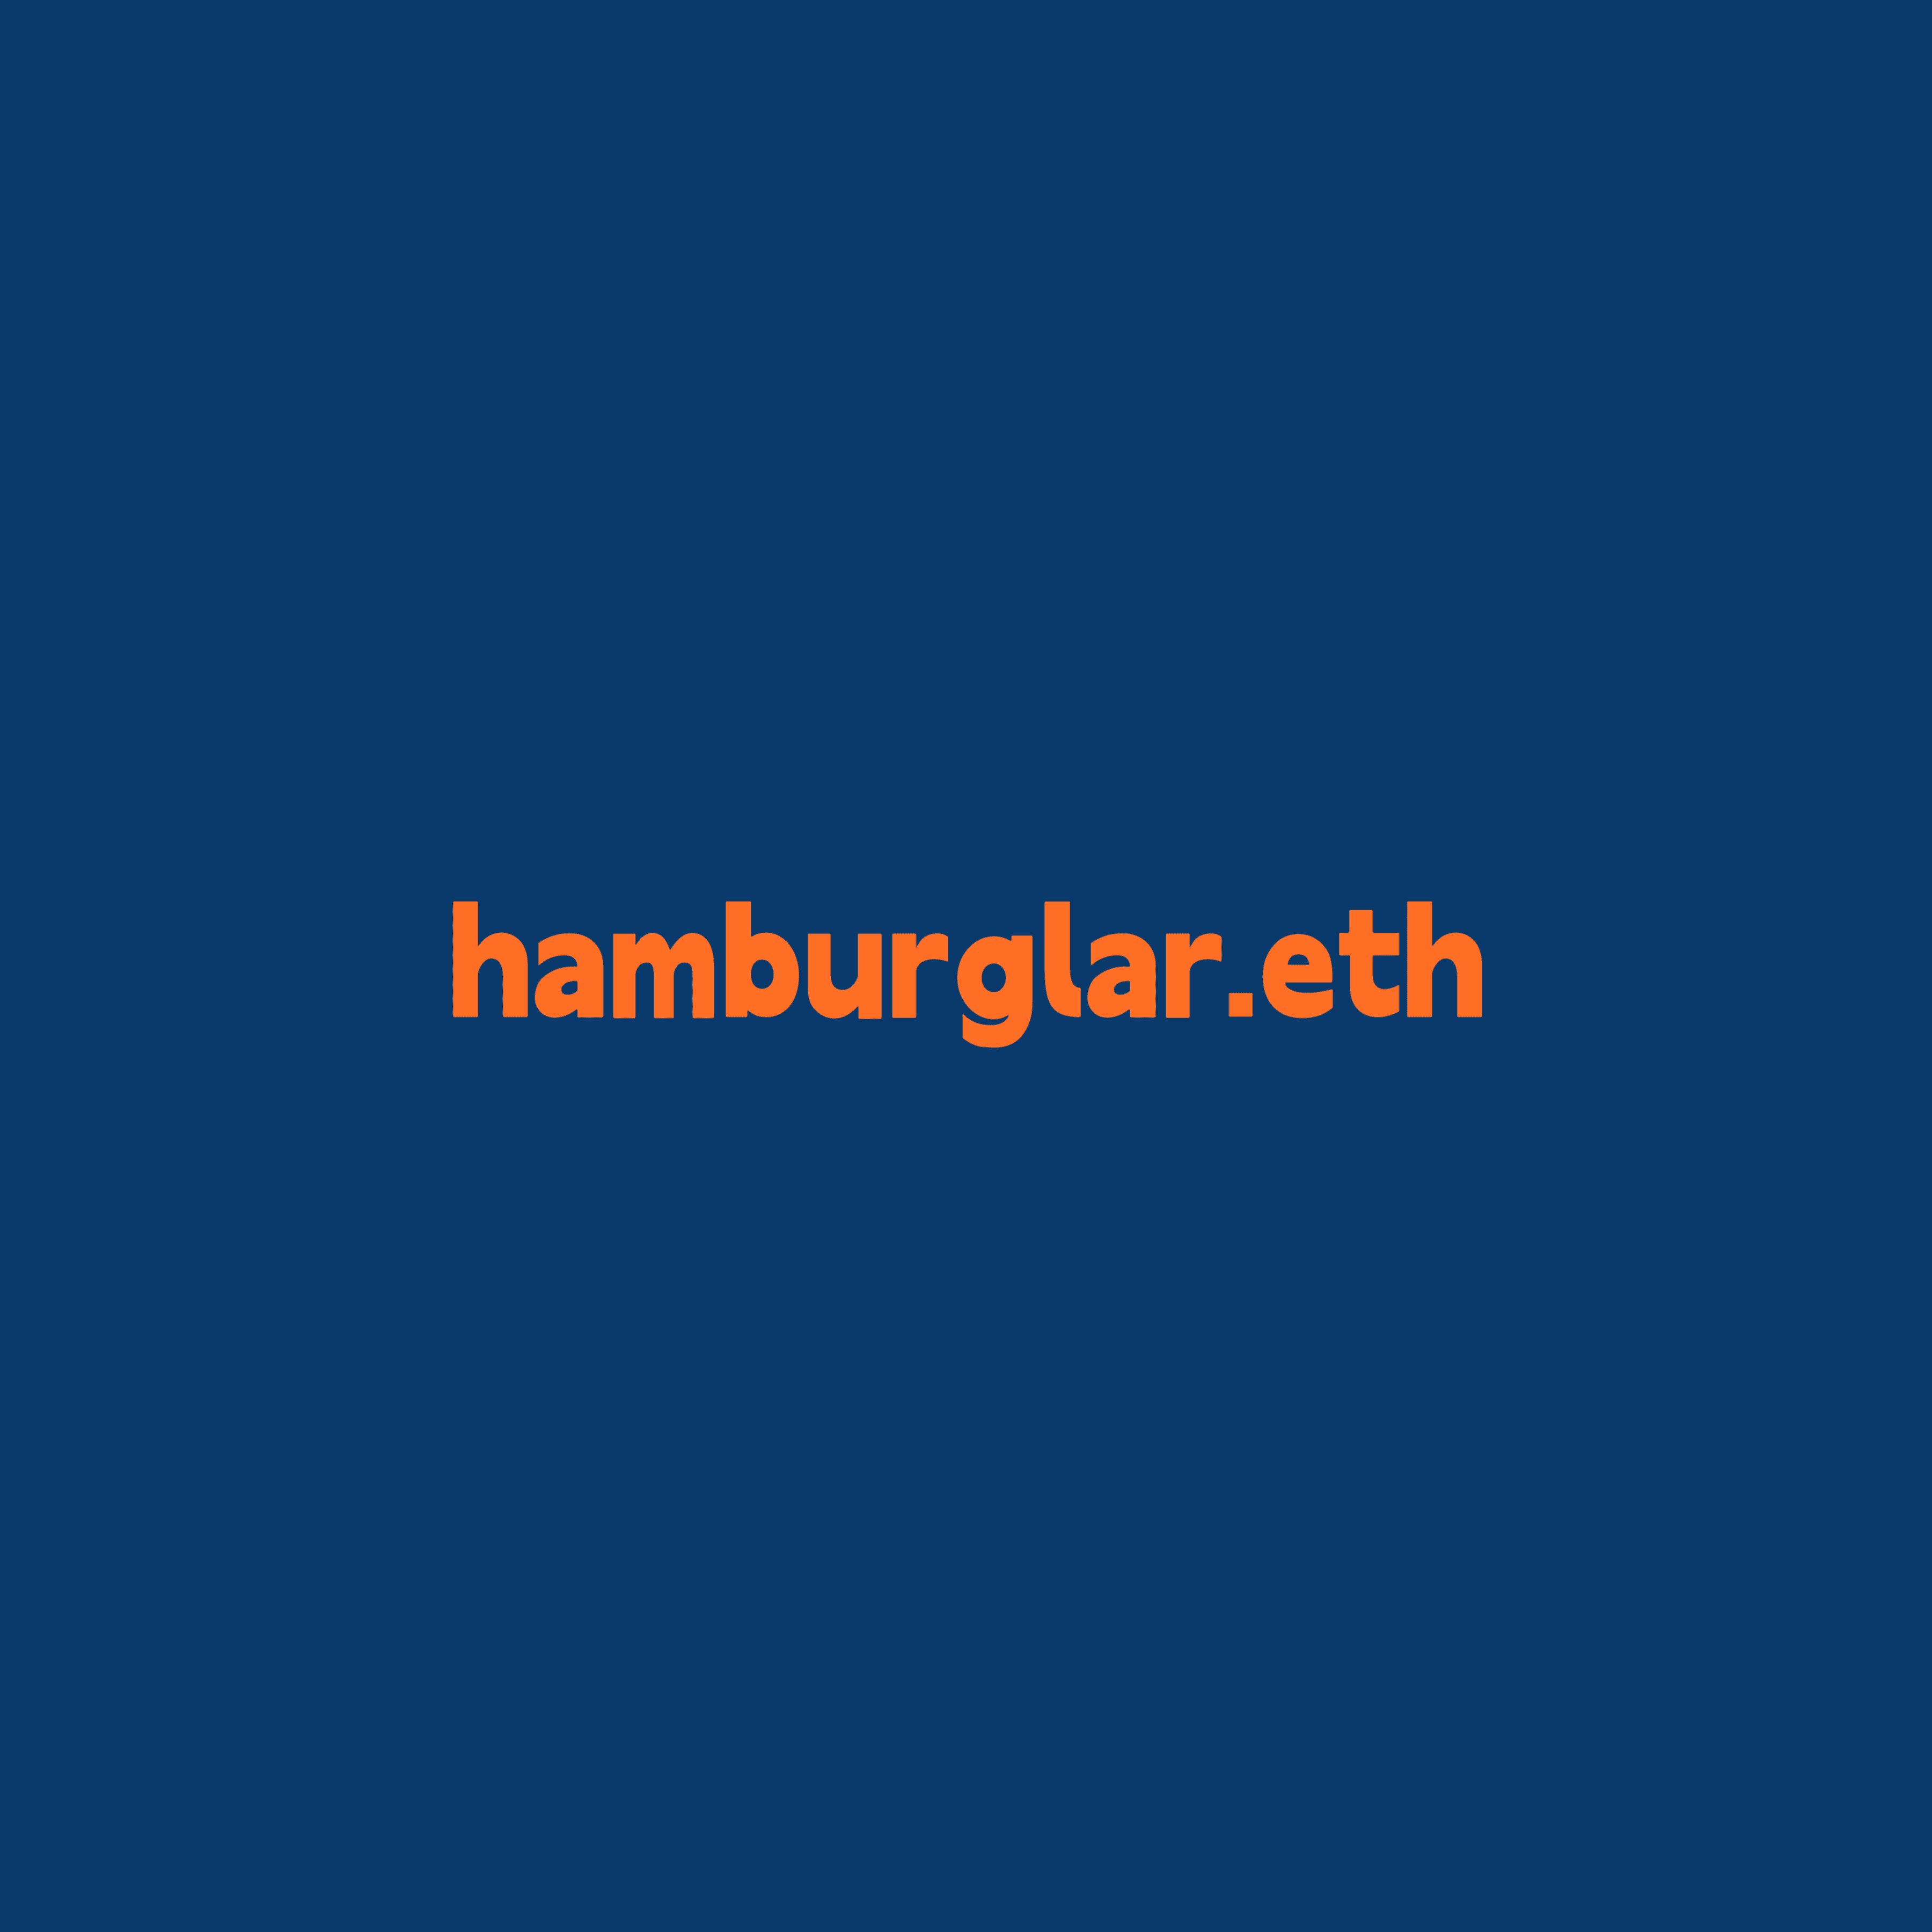 hamburglar_eth banner